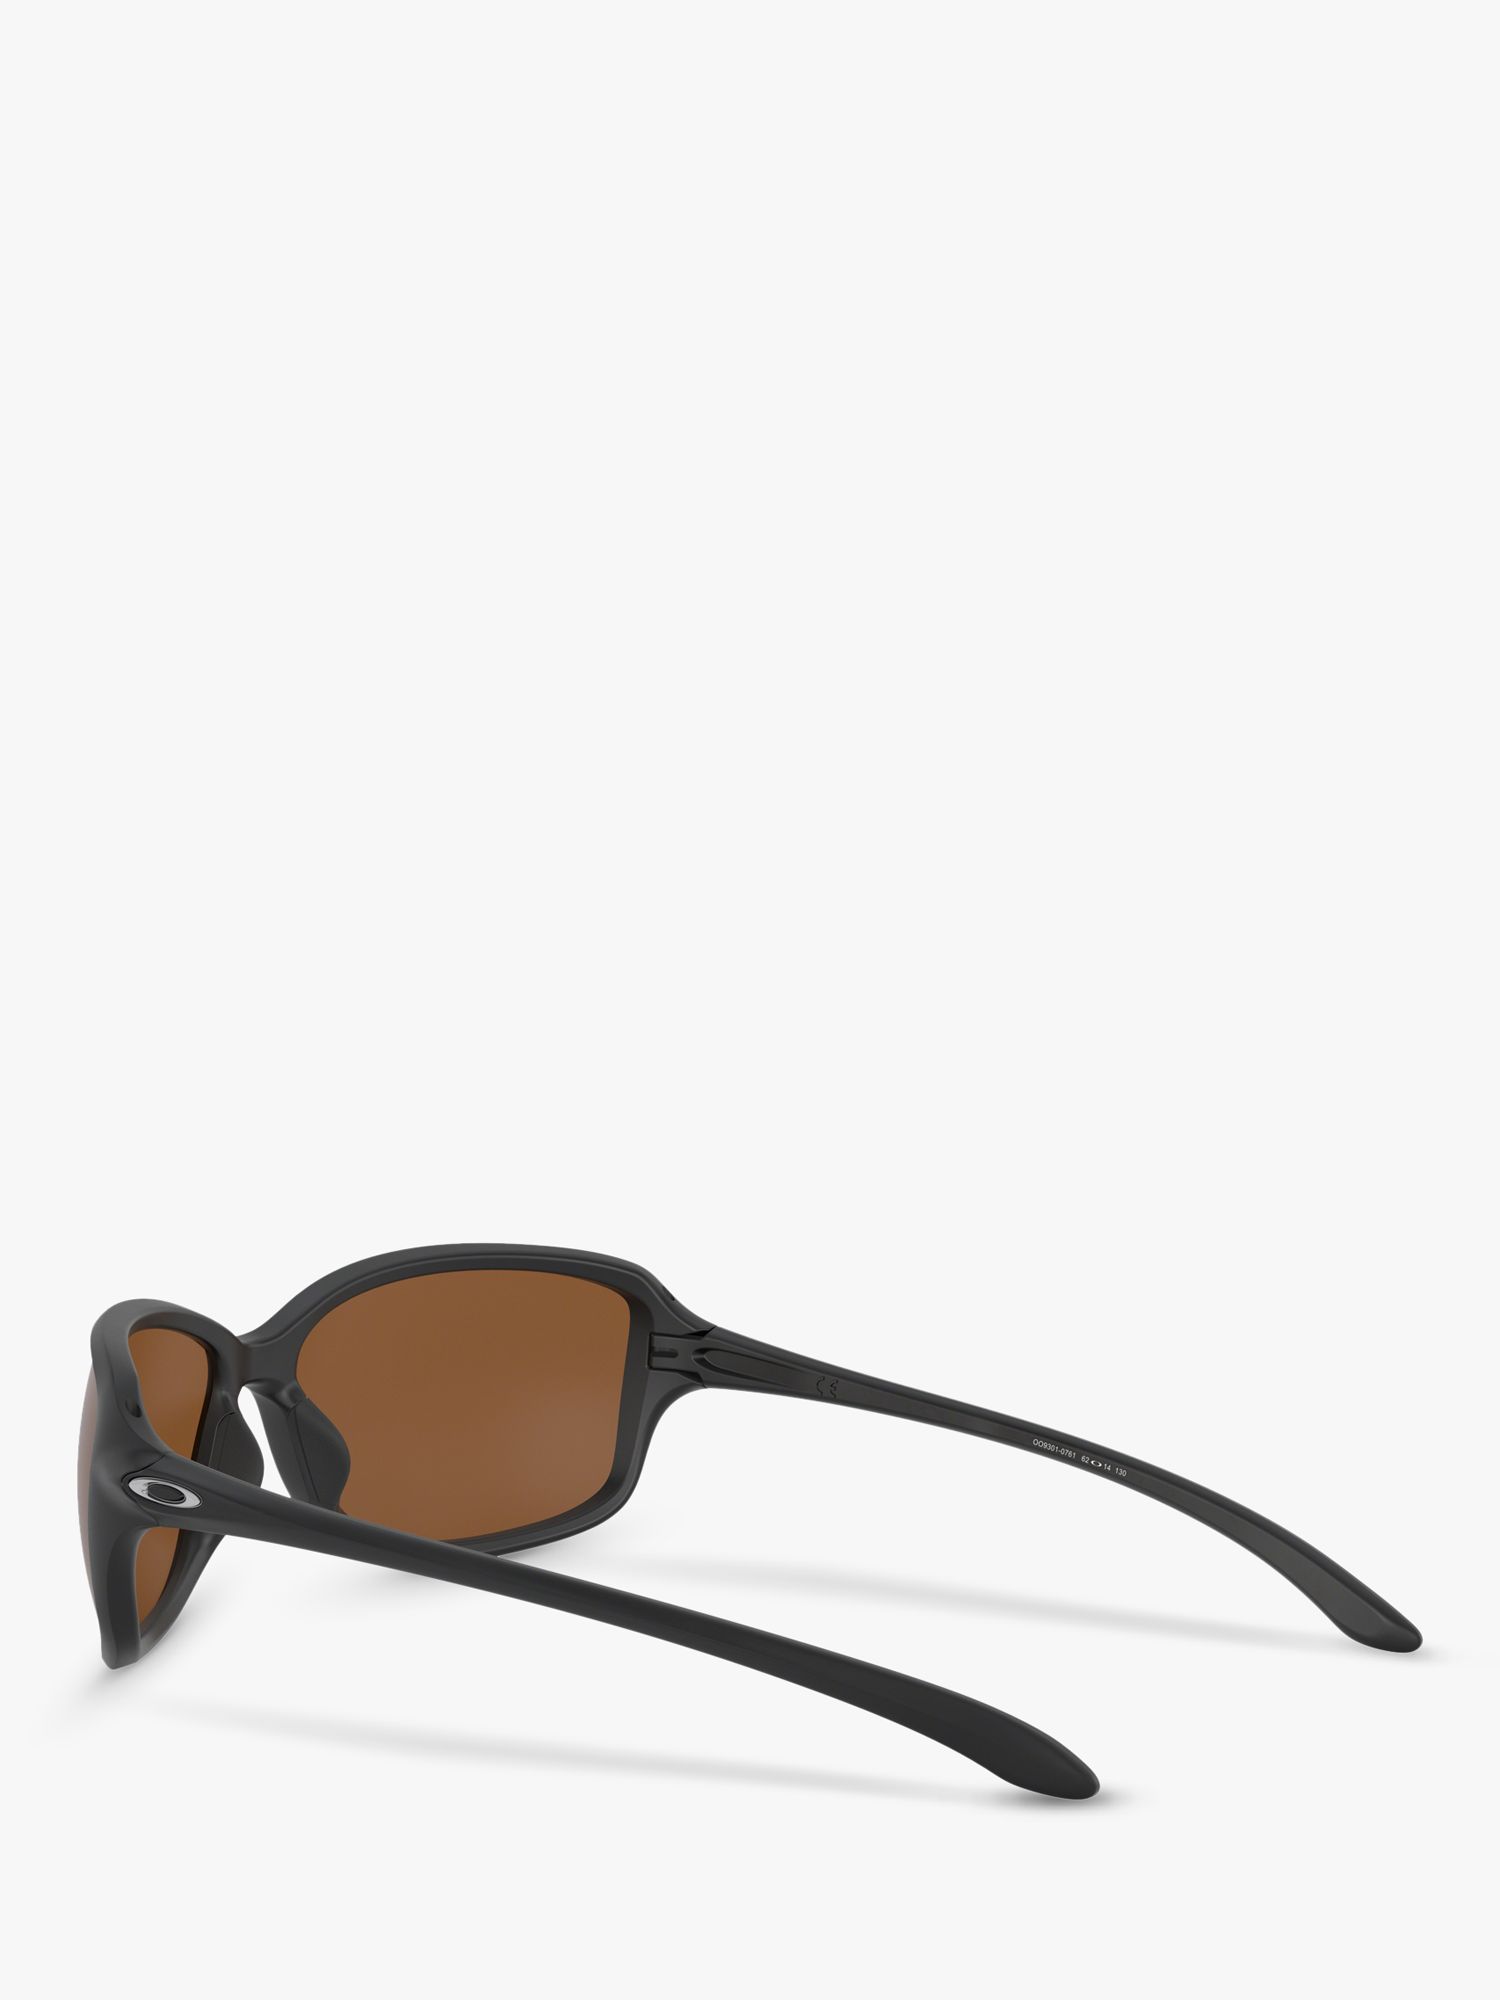 Oakley OO9301 Women's Cohort Prizm Polarised Rectangular Sunglasses, Matte Black/Brown